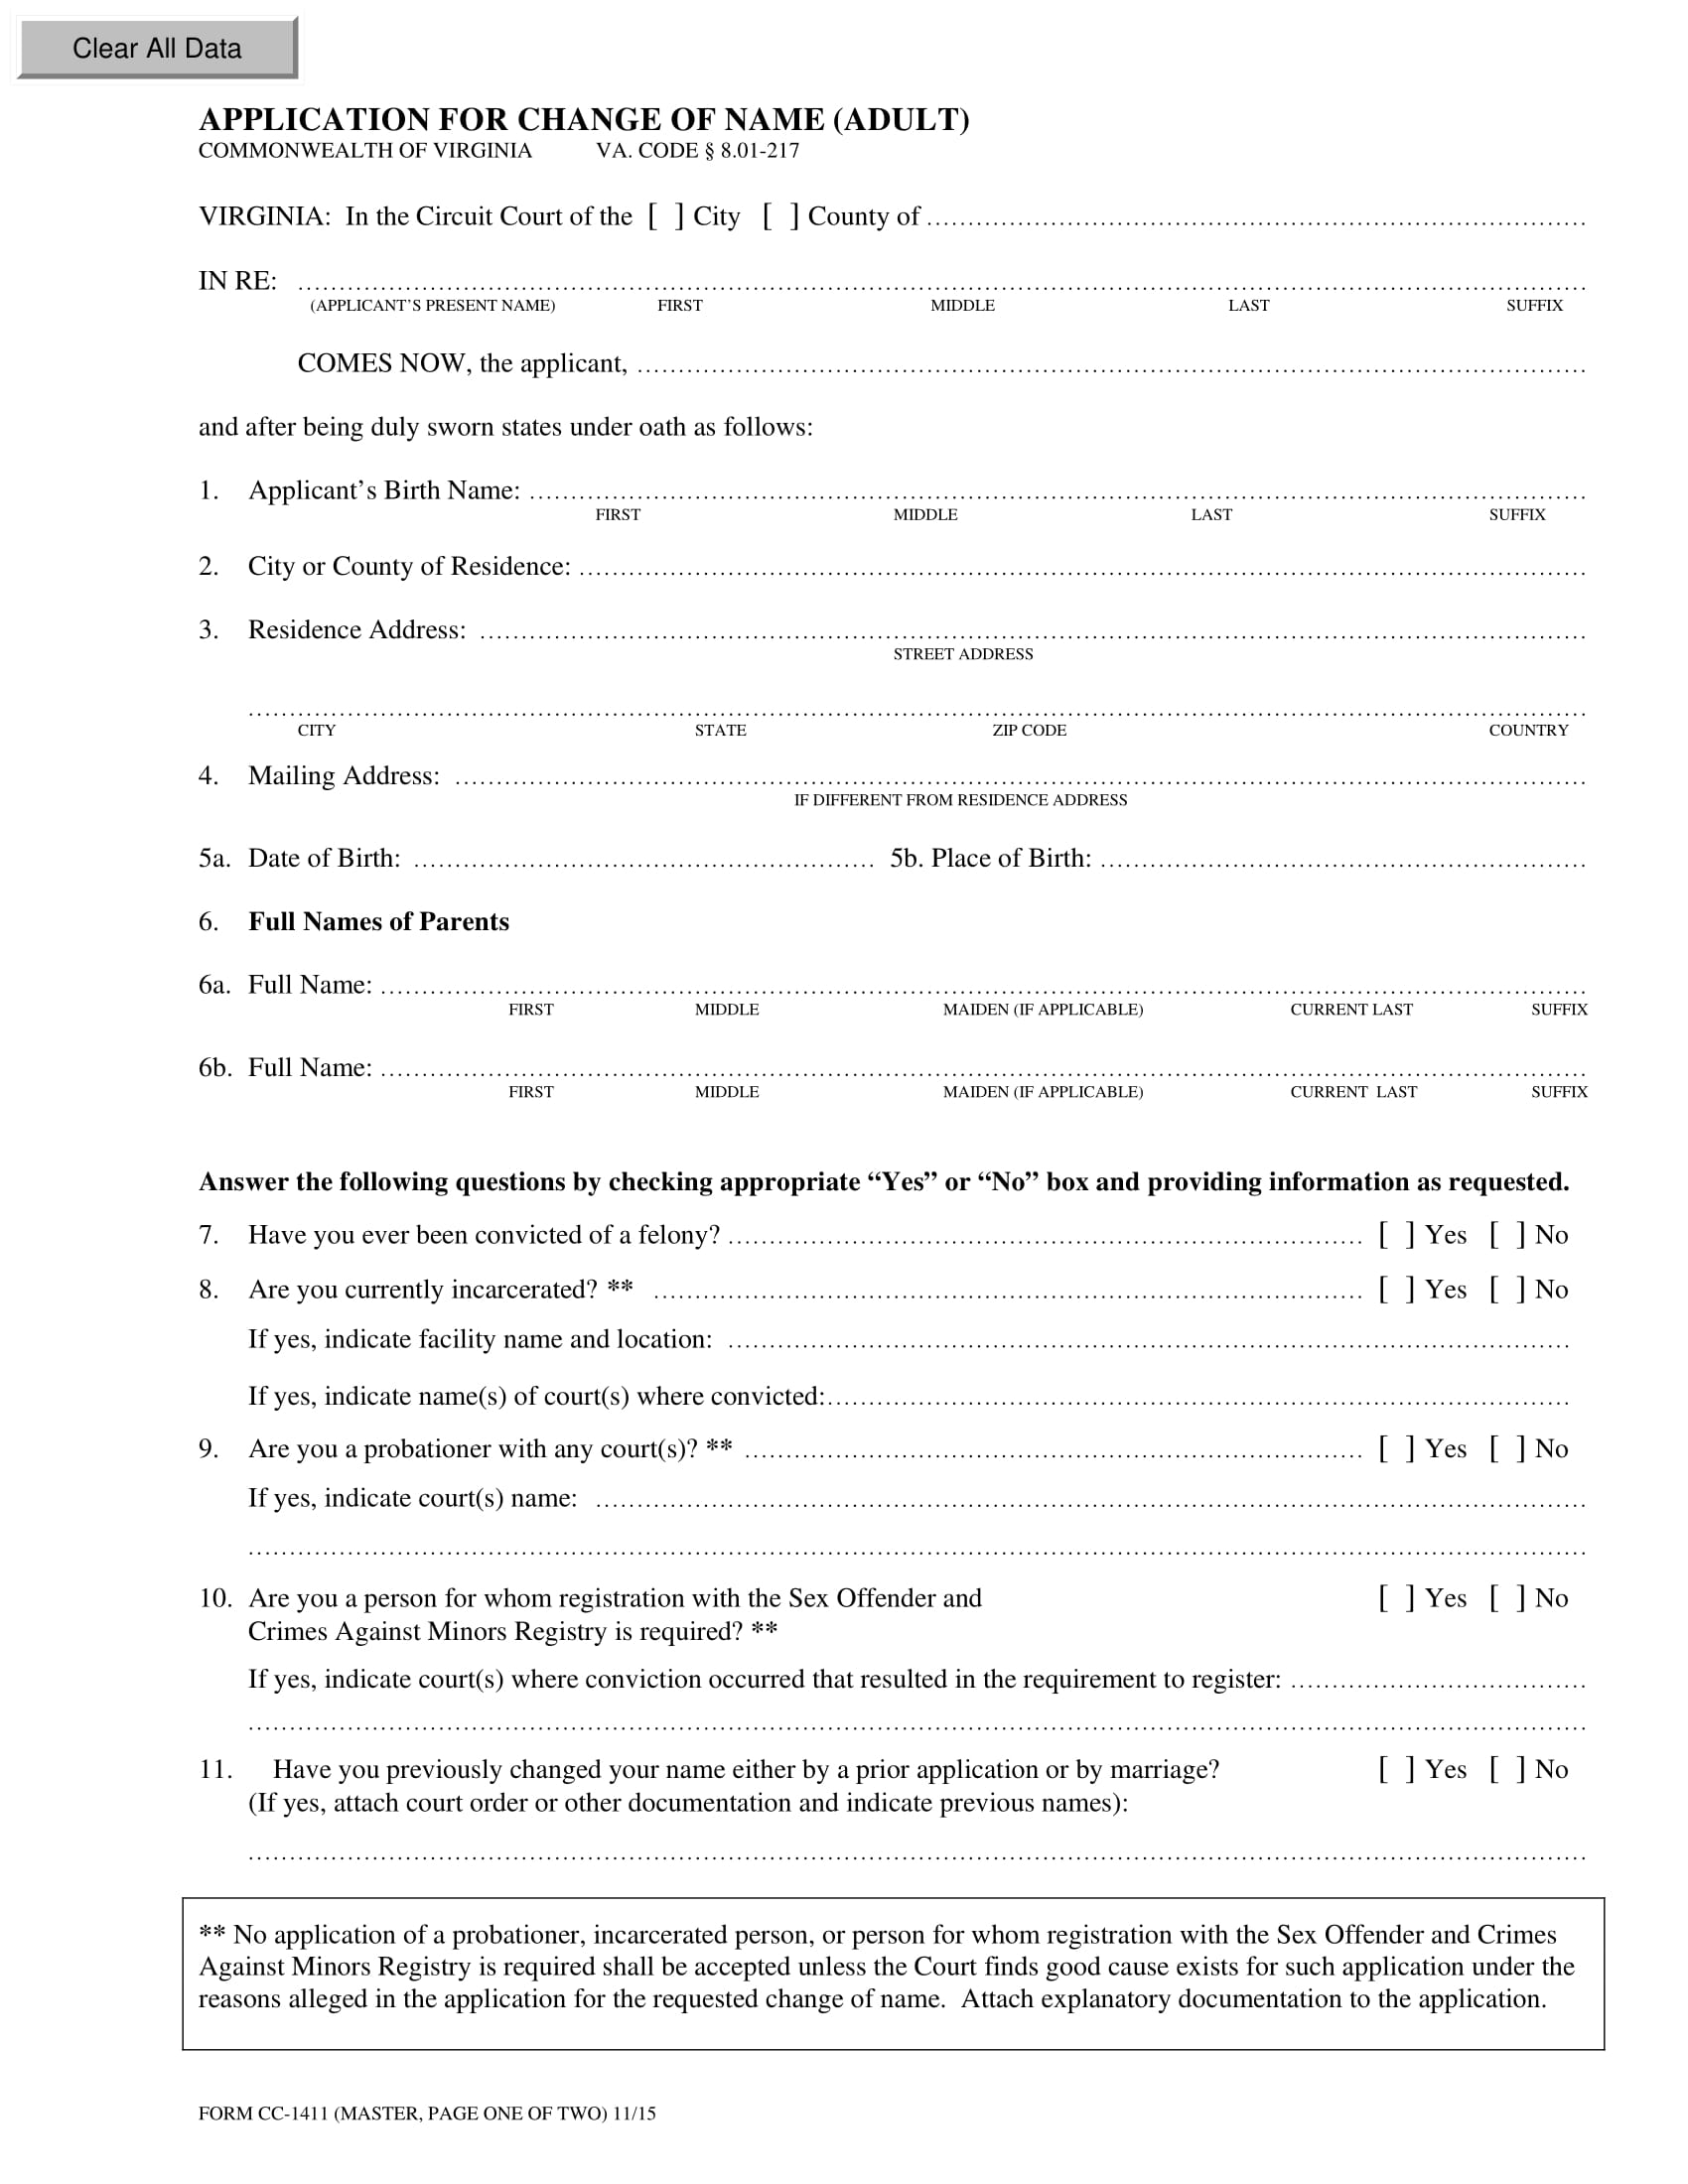 legal name change application form 1